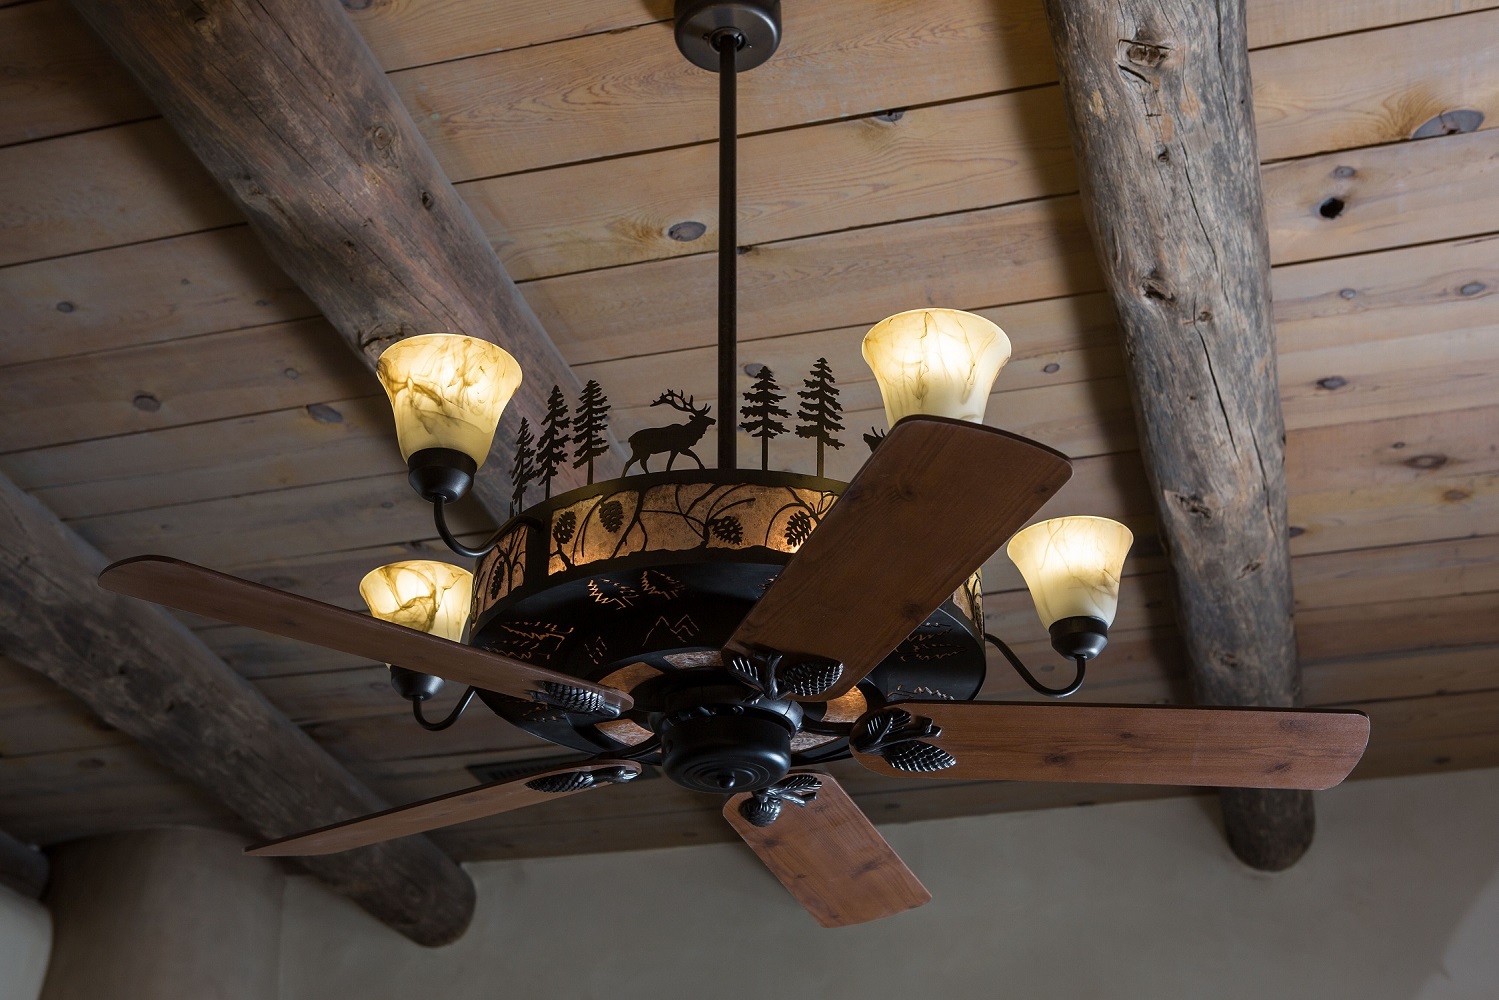 Home depot funter ceiling fans - mastertatka